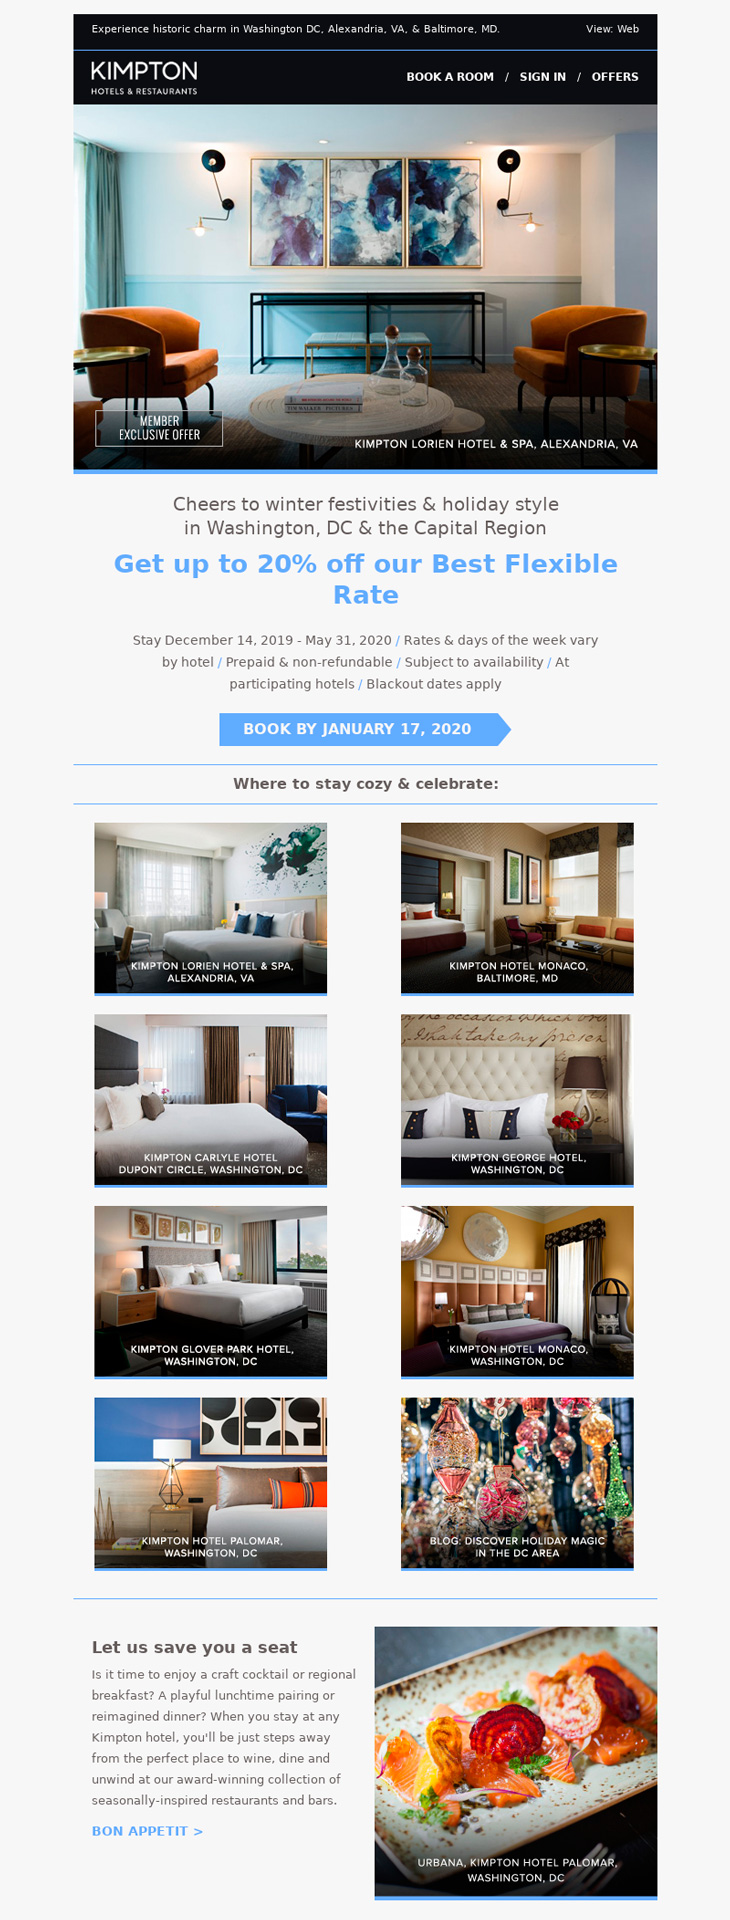 Email Marketing para Hoteles - Ventajas hotel